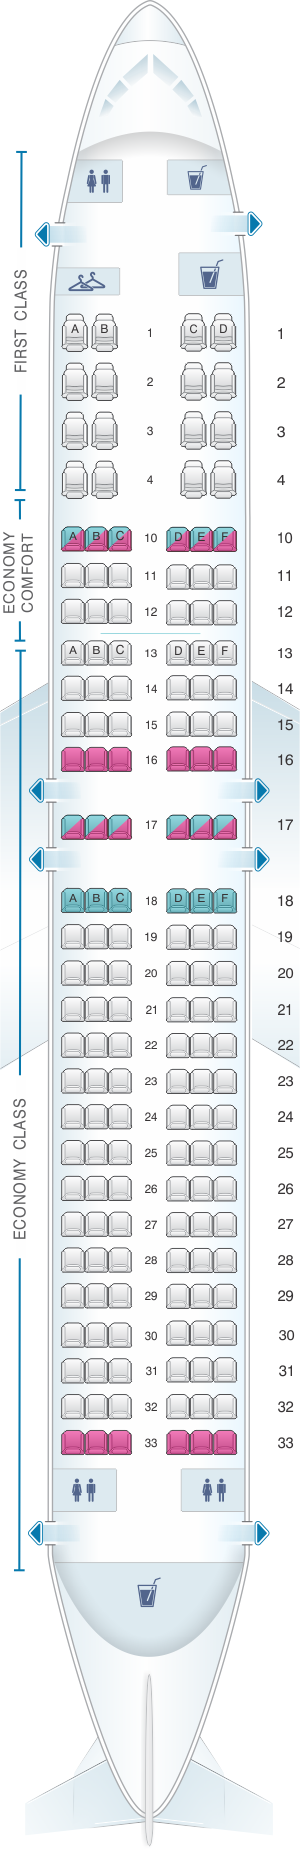 Boeing 737 900 Seating Chart Delta - Frameimage.org